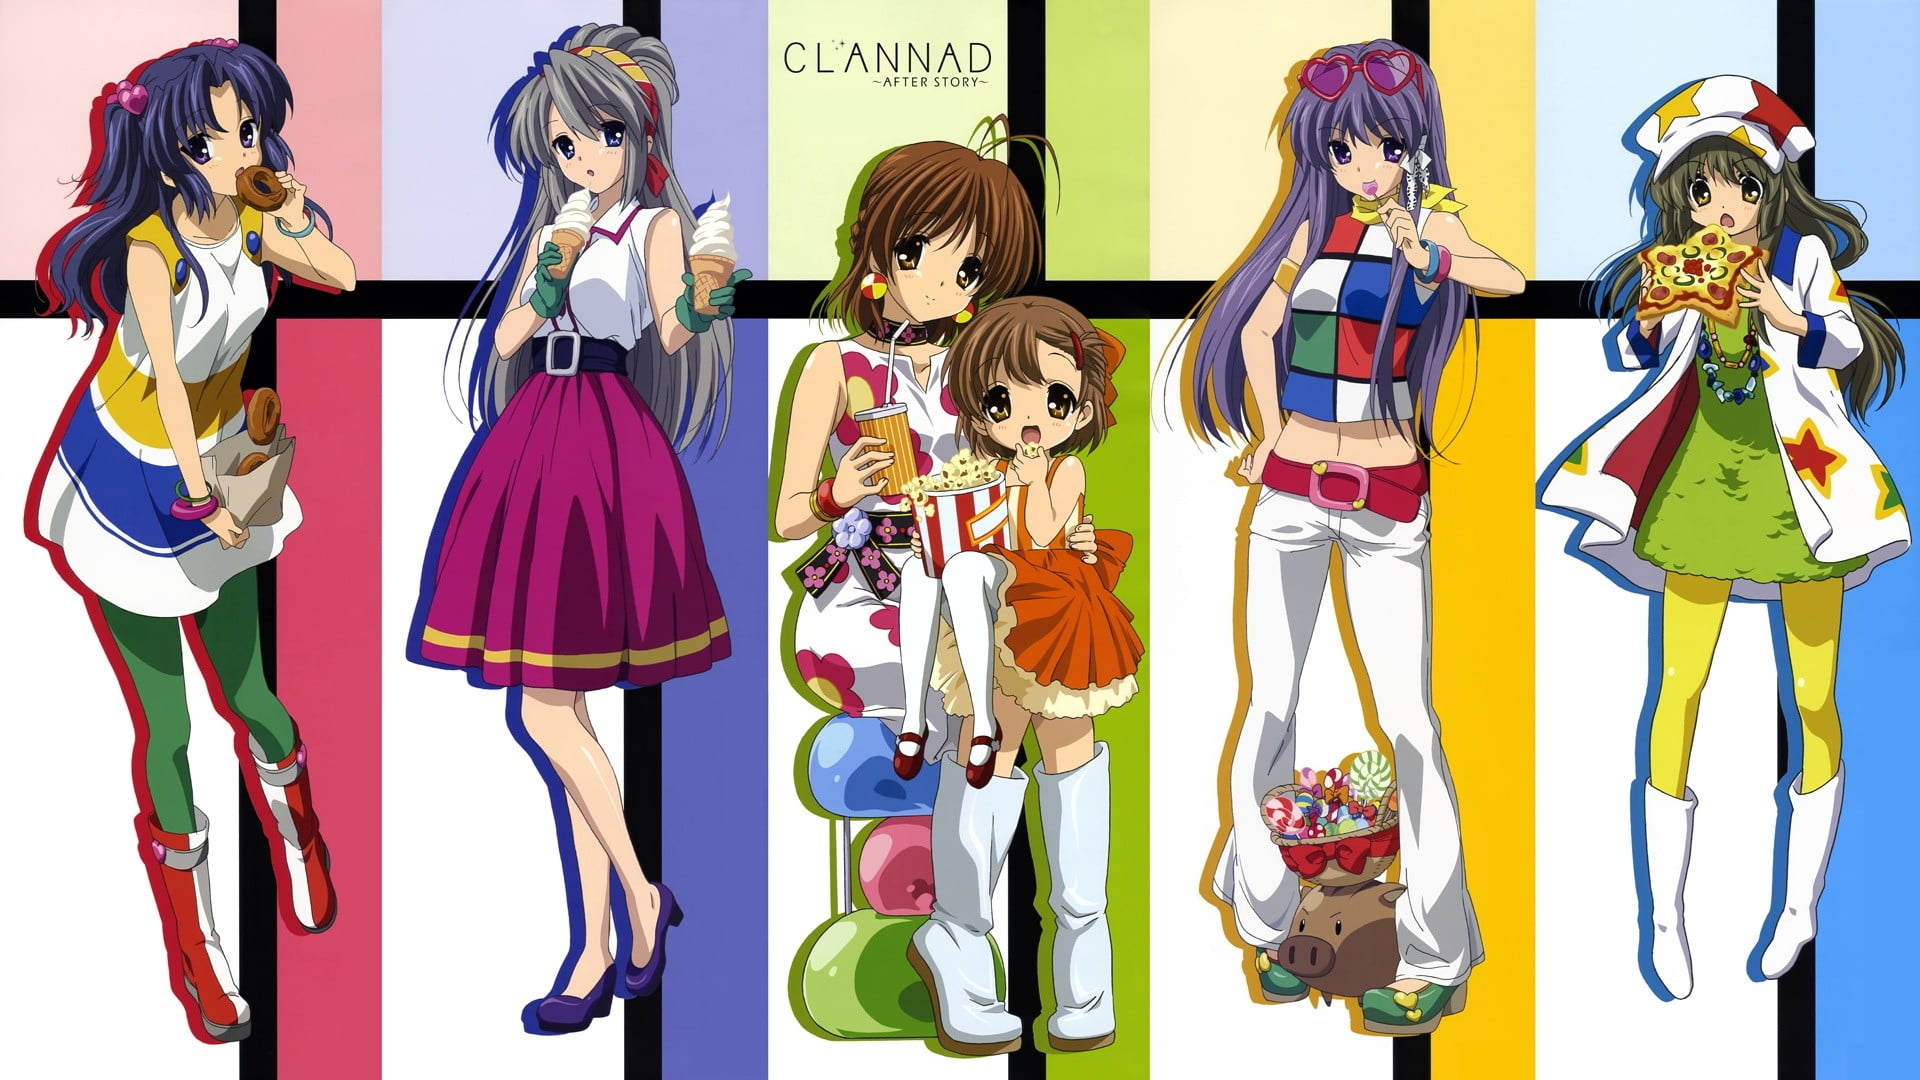 Clannad, Ichinose Kotomi, Sakagami Tomoyo, Furukawa Nagisa